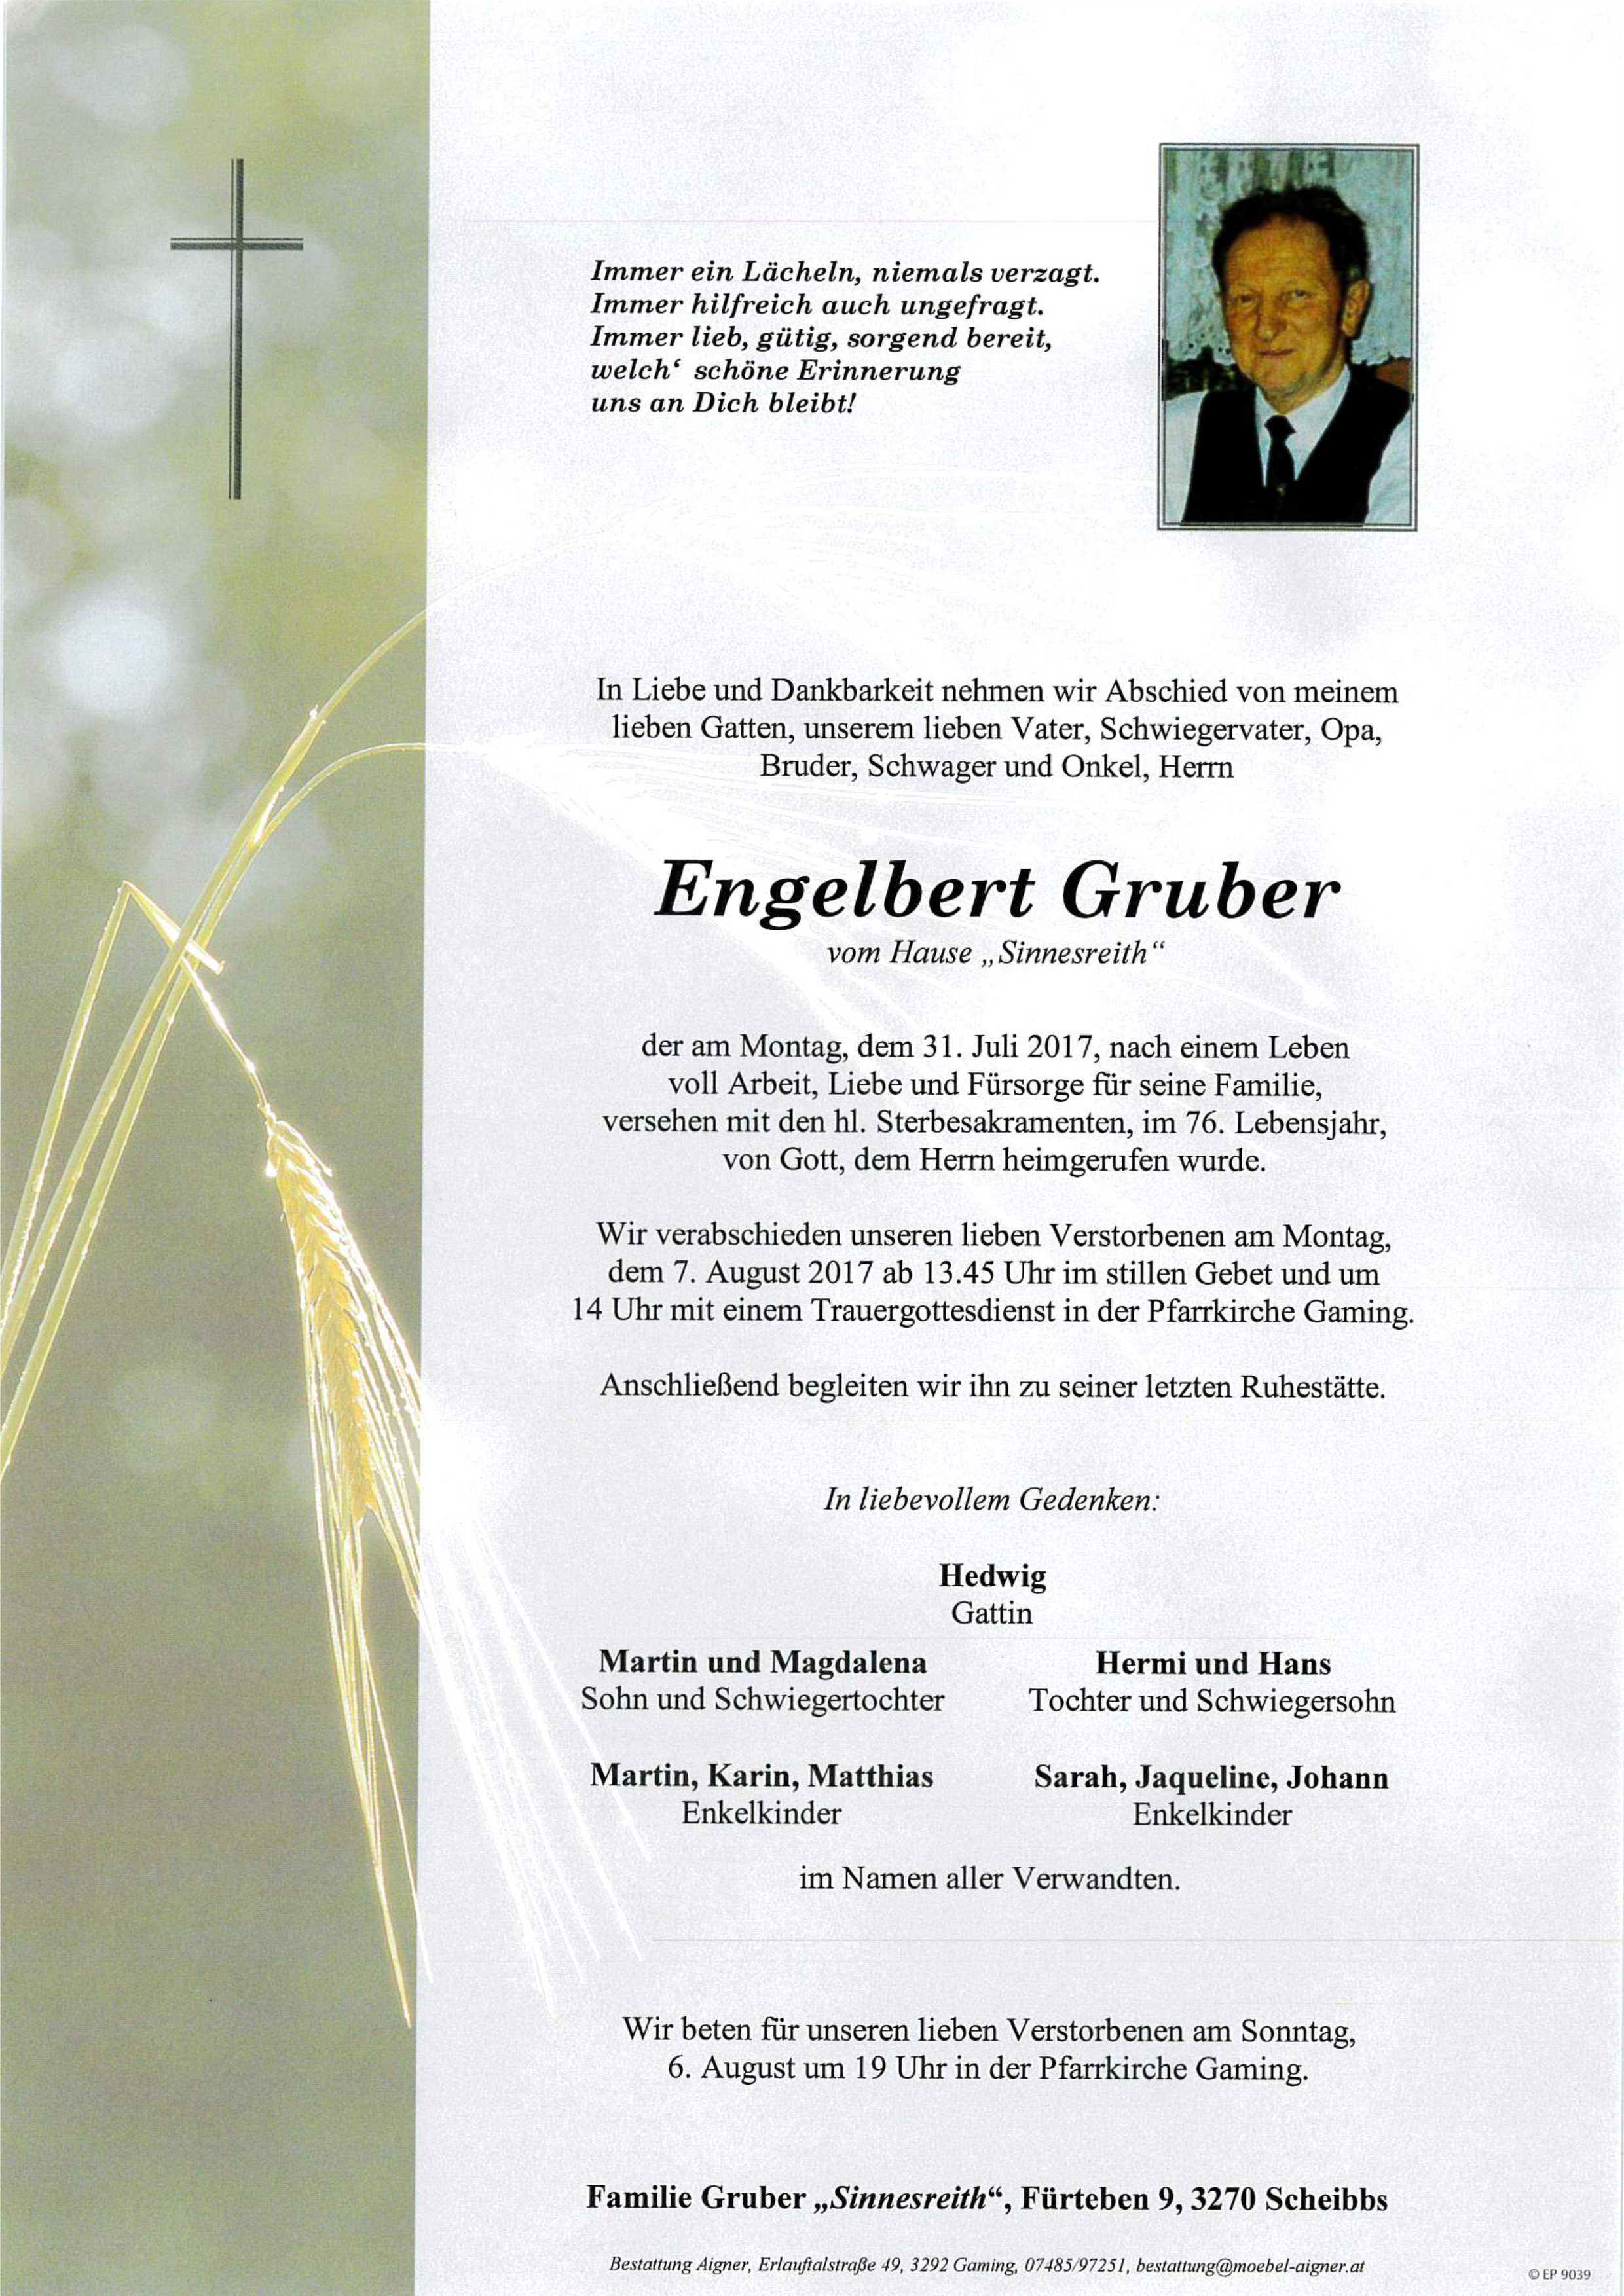 Engelbert Gruber vuldo Sinisreiter